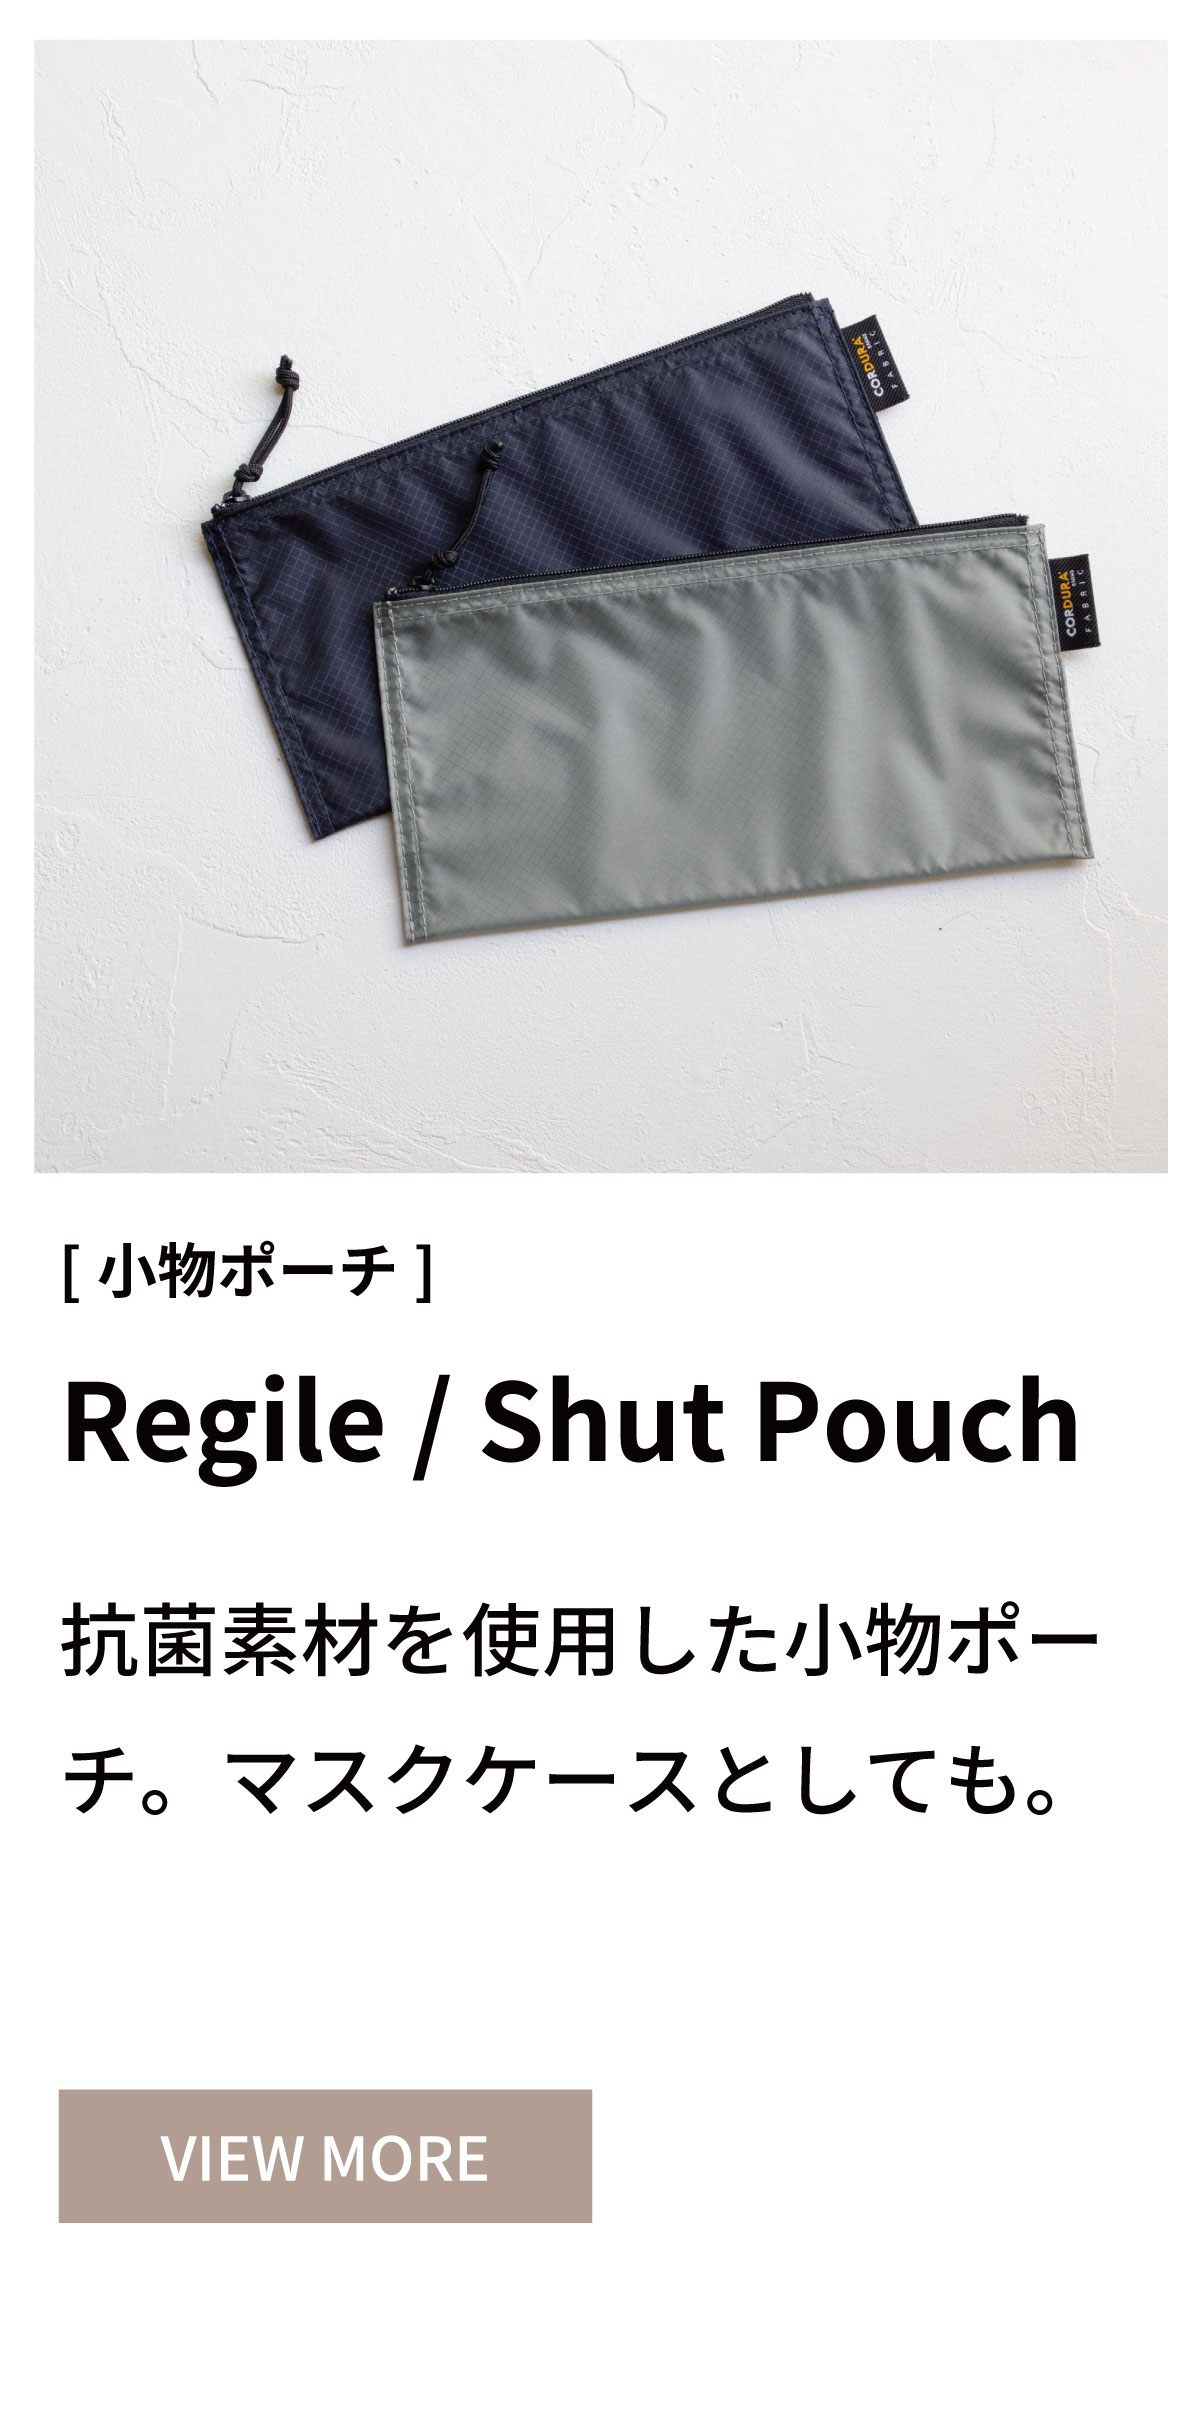 Regile / Shut Pouch